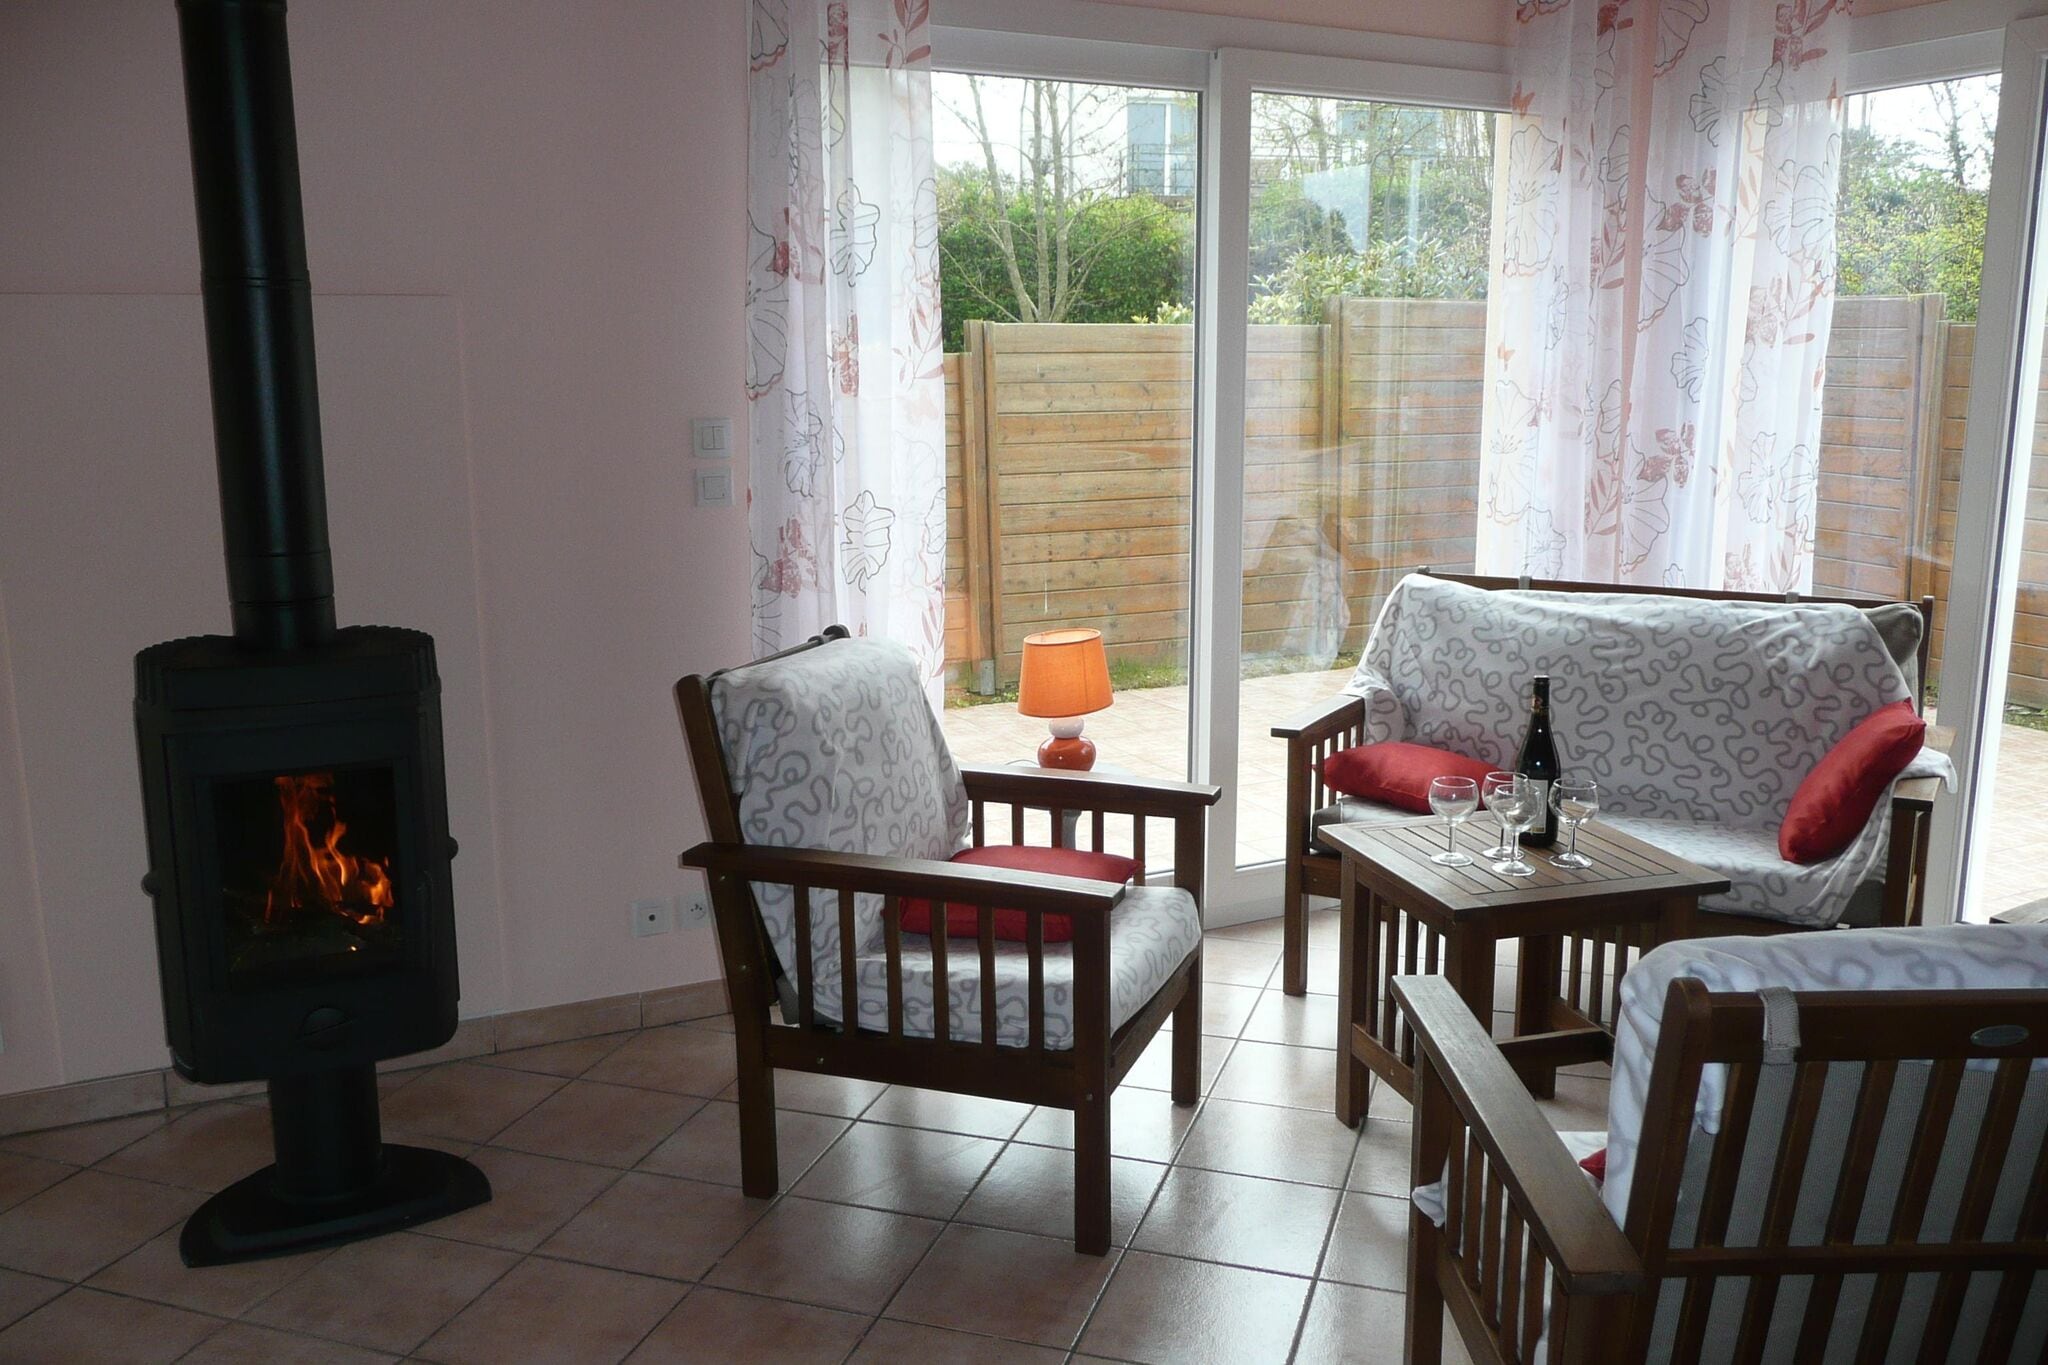 Holiday home near the beach, enclosed garden, fireplace, Plouarzel